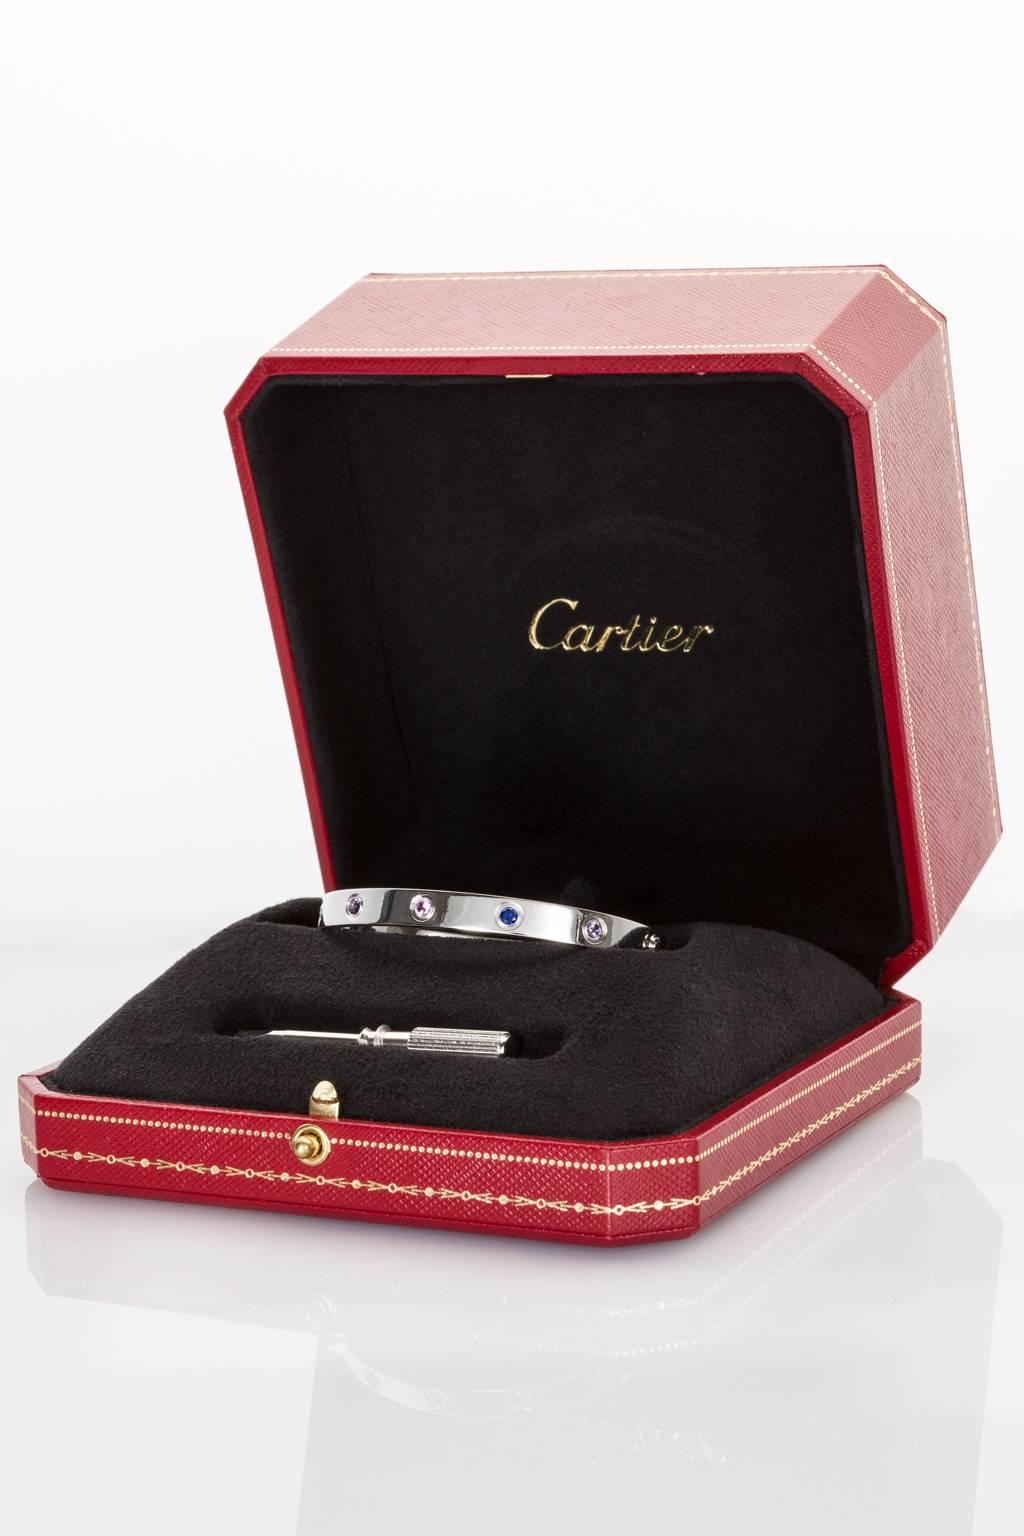 Cartier Multi-Gem Set Love Bangle 18 Karat White Gold 1